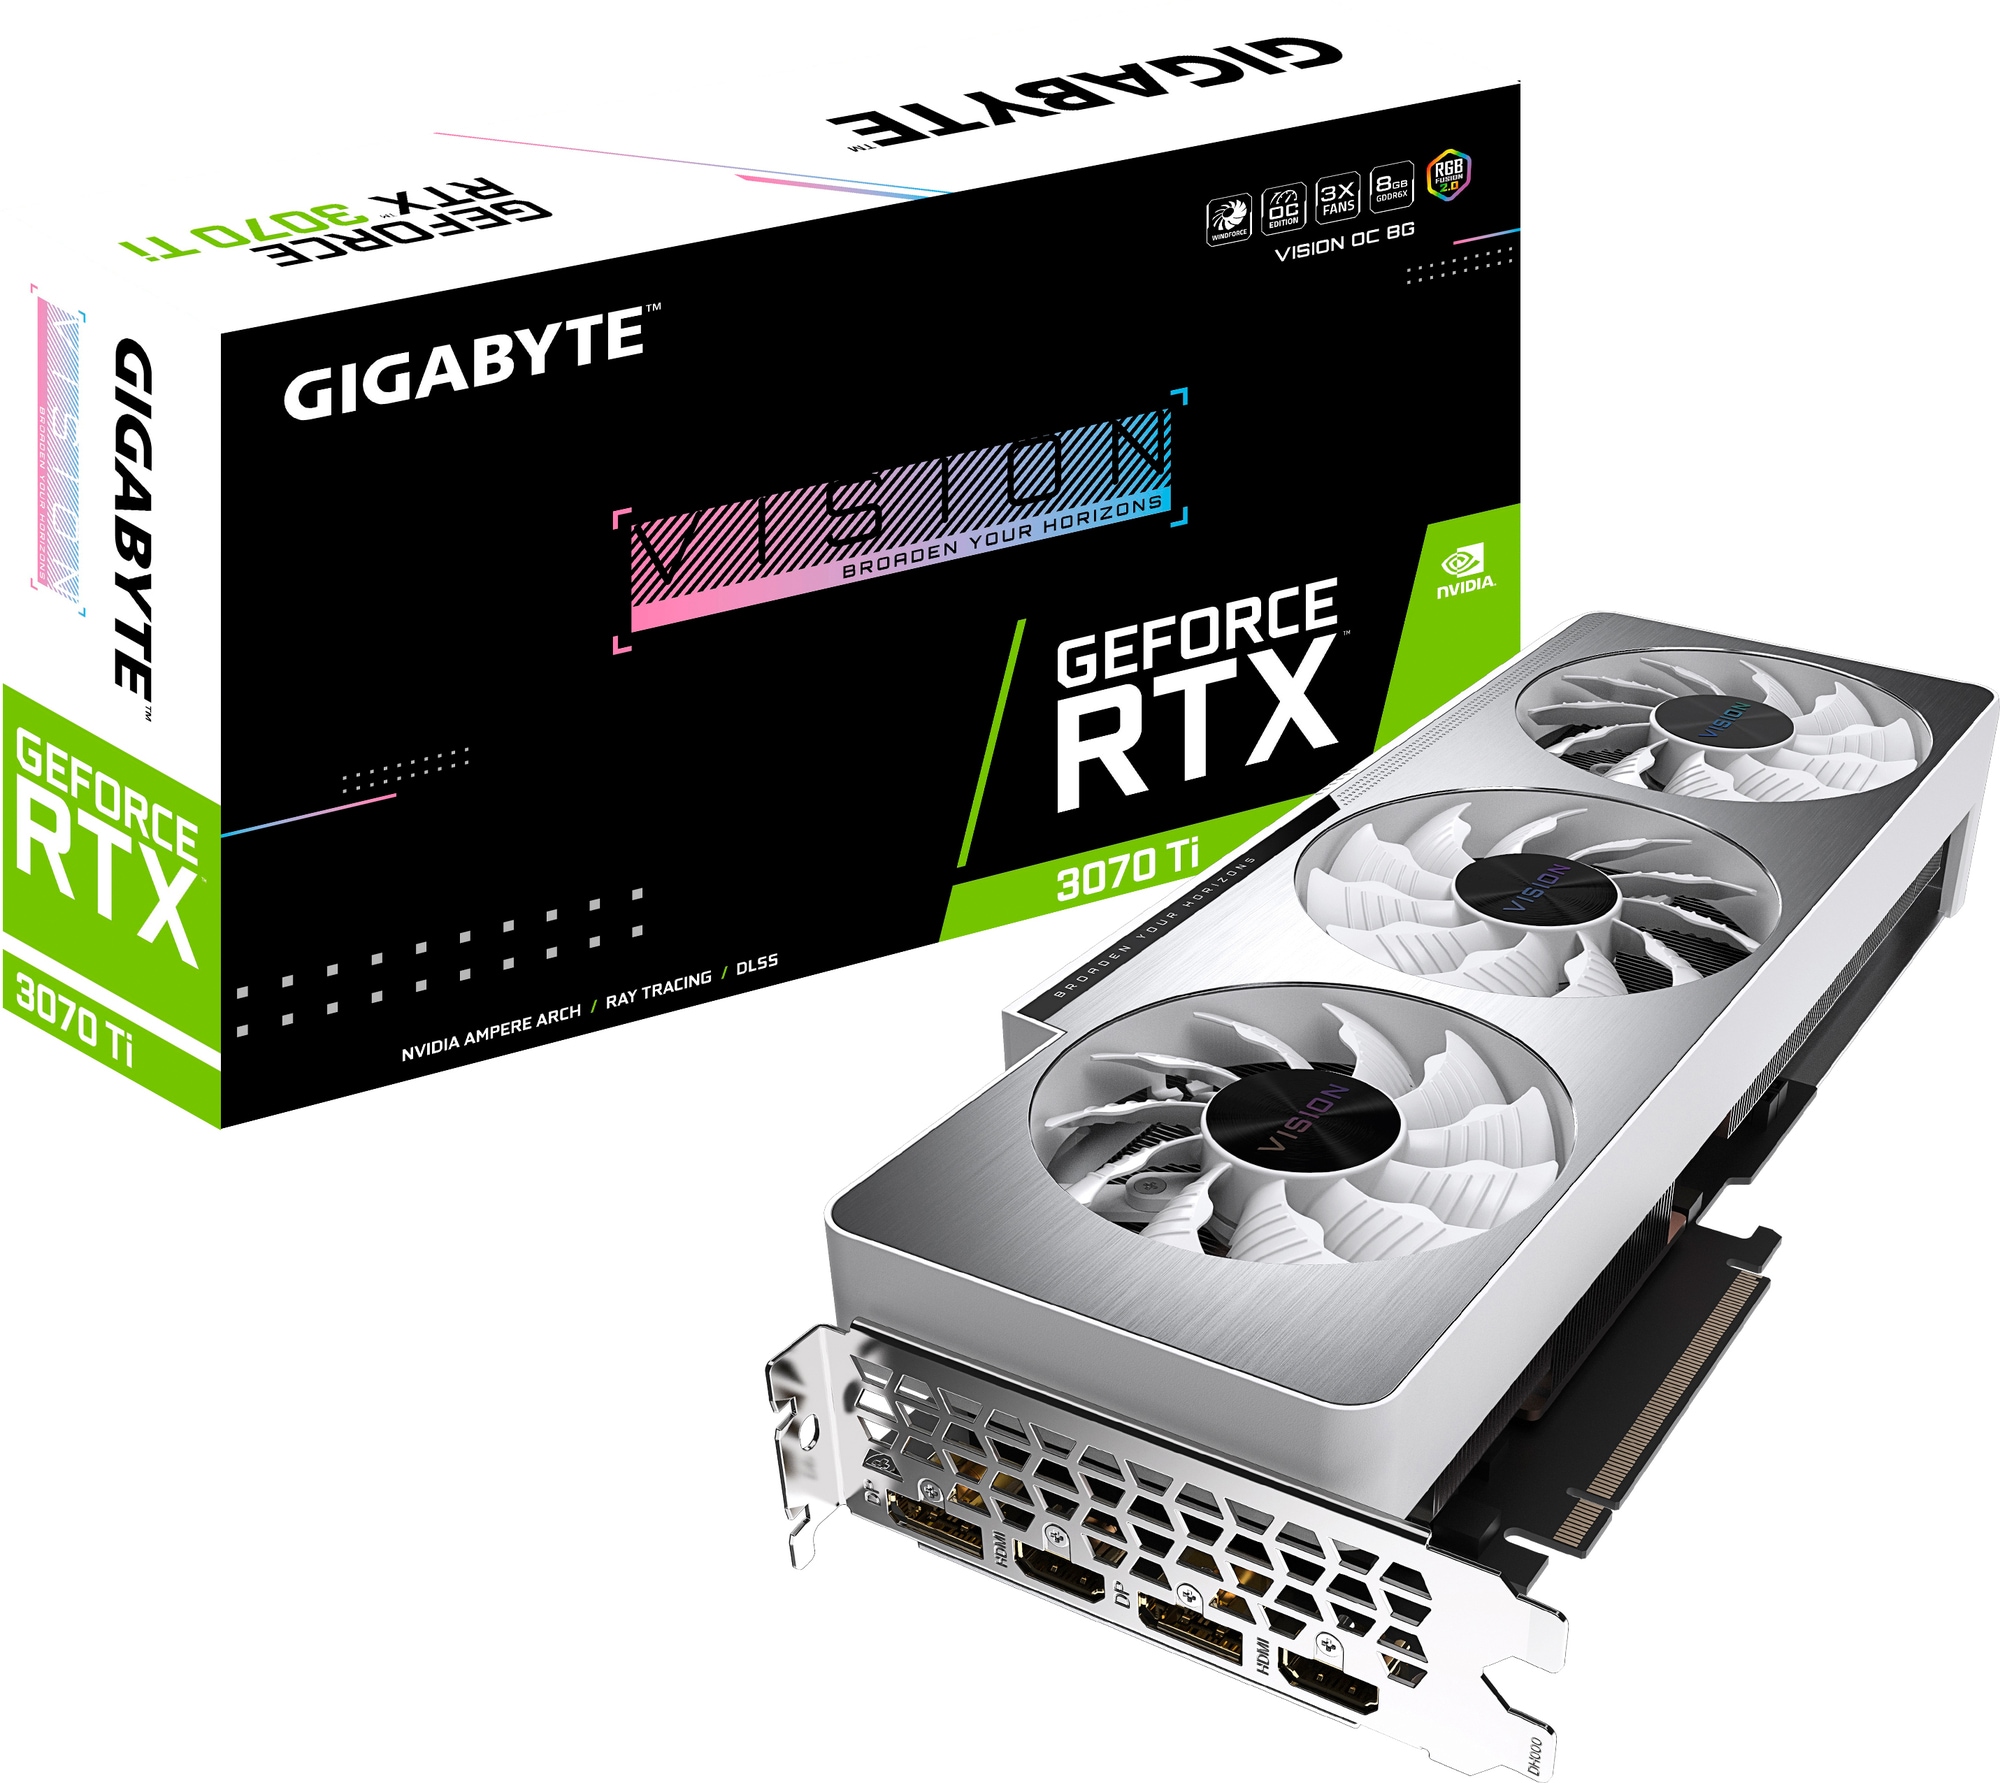 Gigabyte GeForce RTX 3070 Ti VISION OC 8G grafikkort - Elkjøp